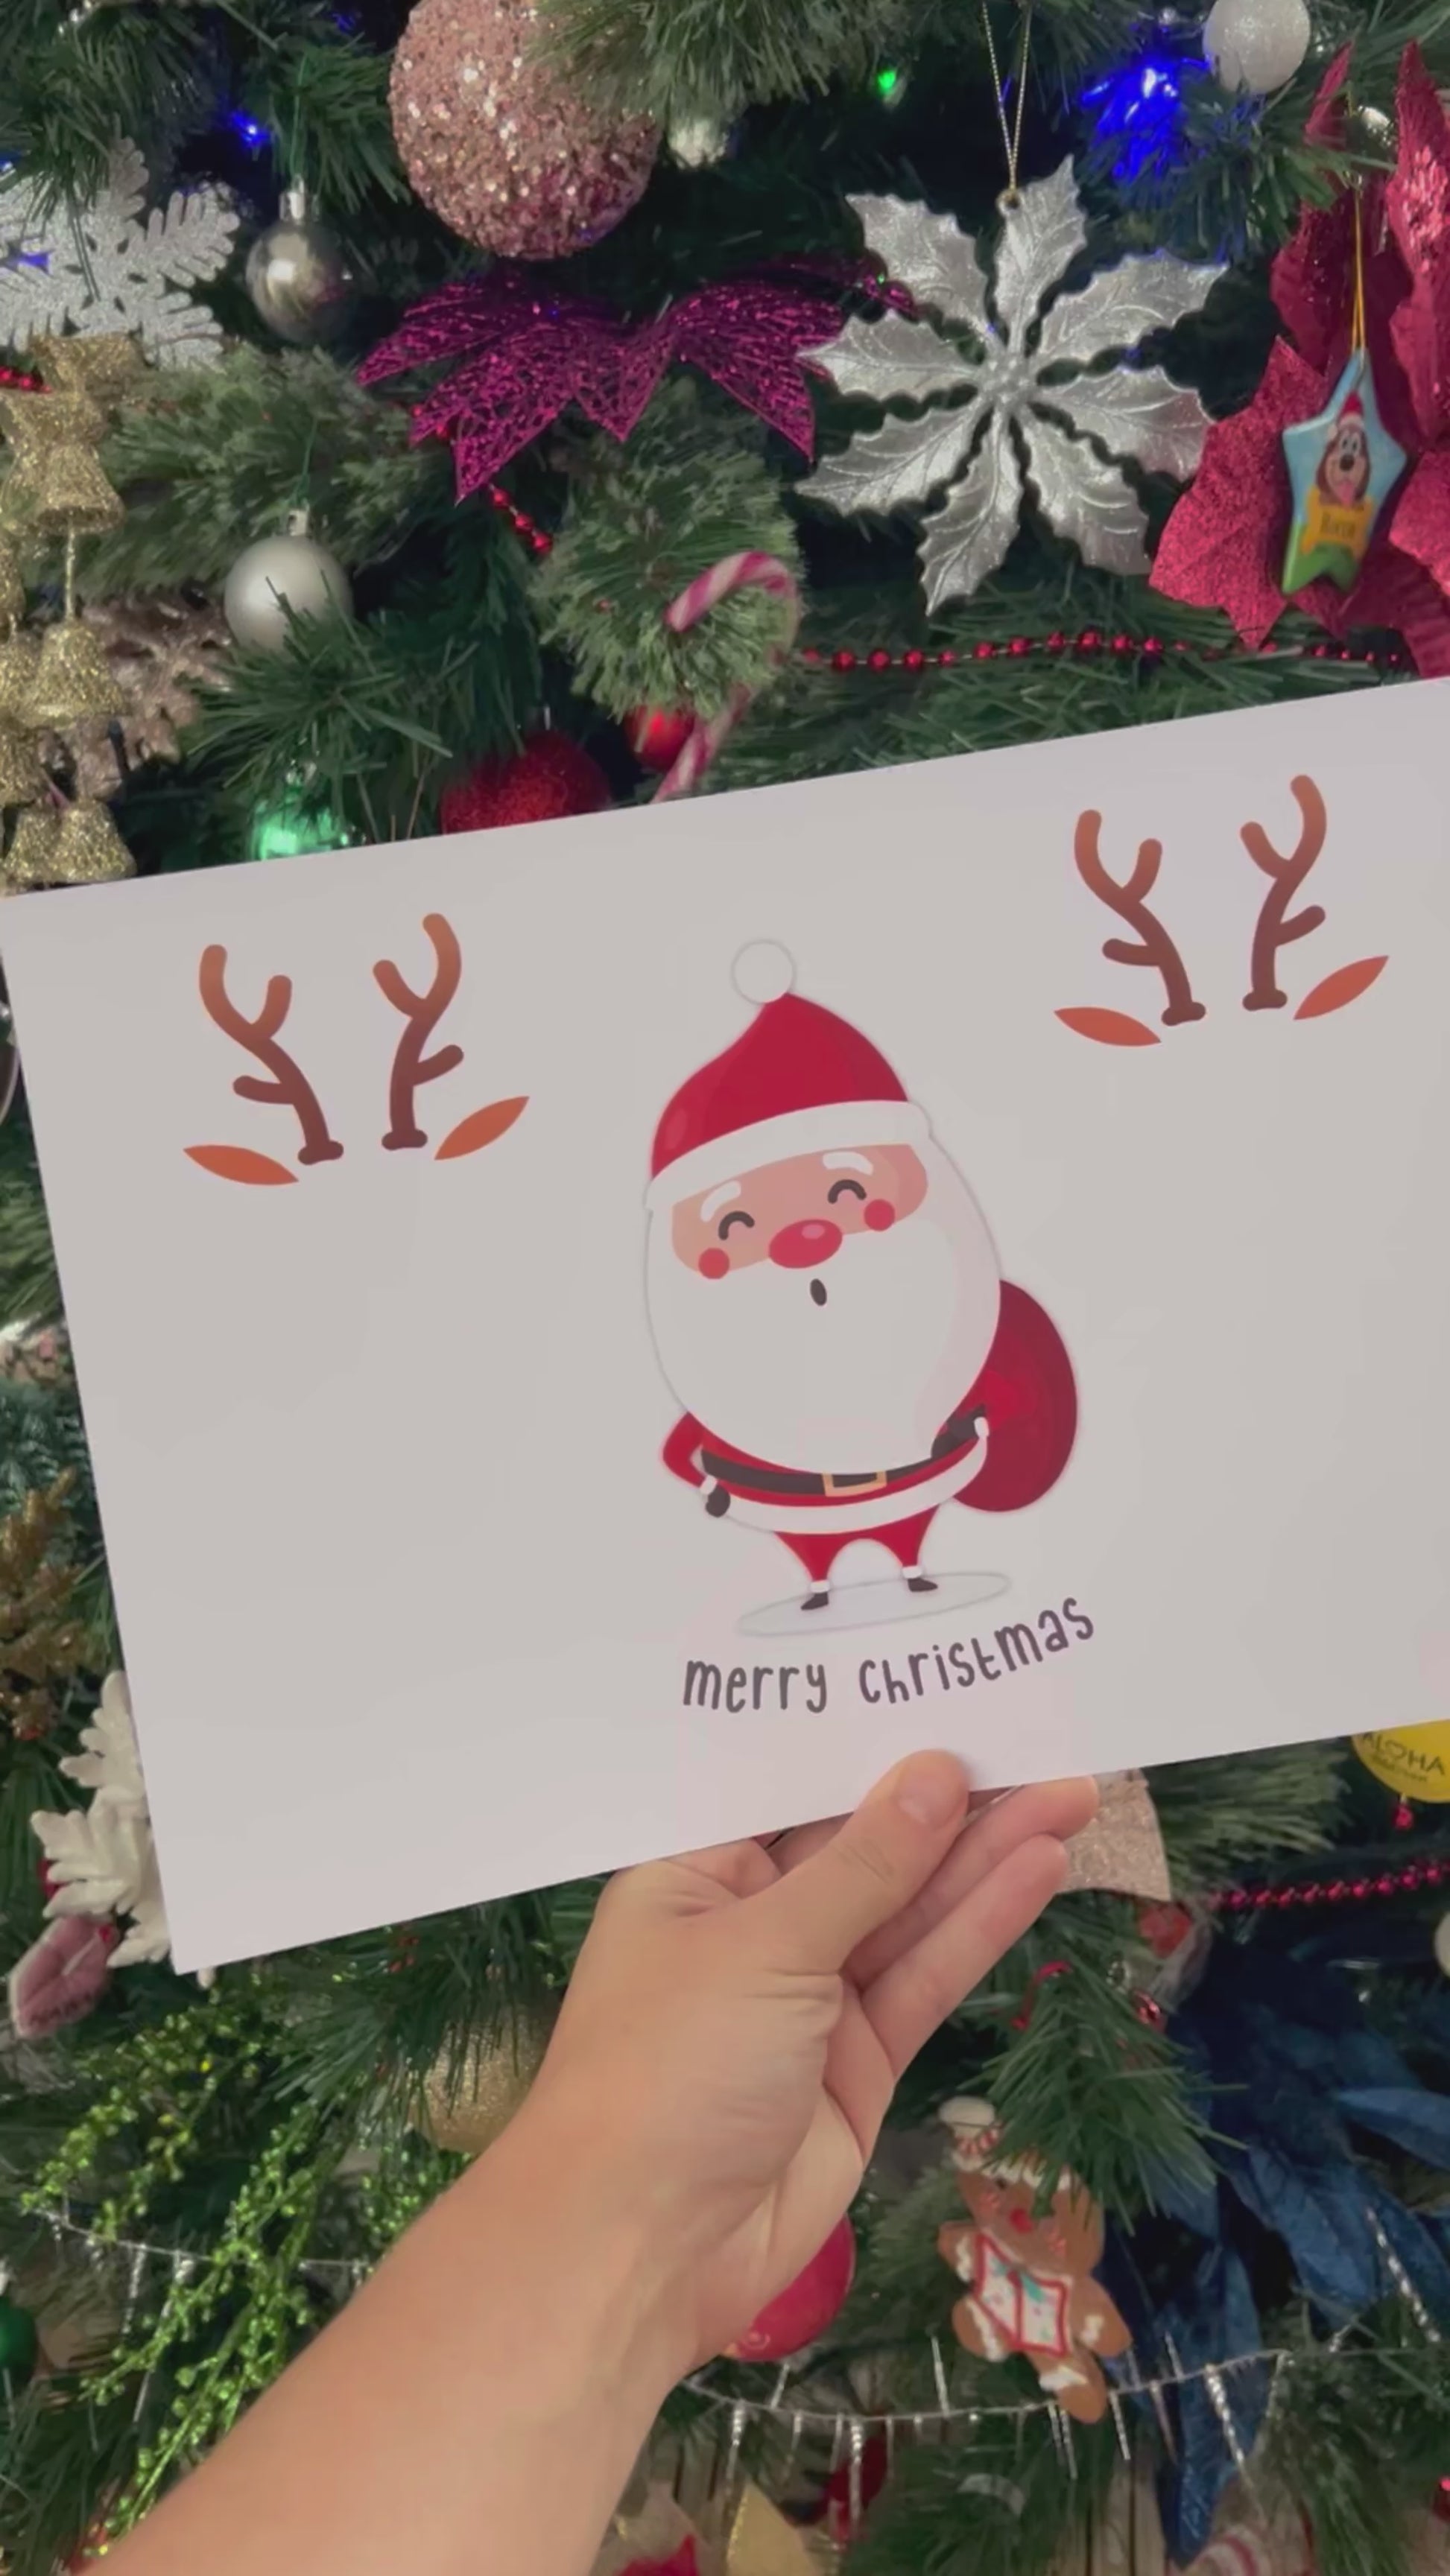 Santa's Footprints - A Fun Christmas Morning Surprise for Kids